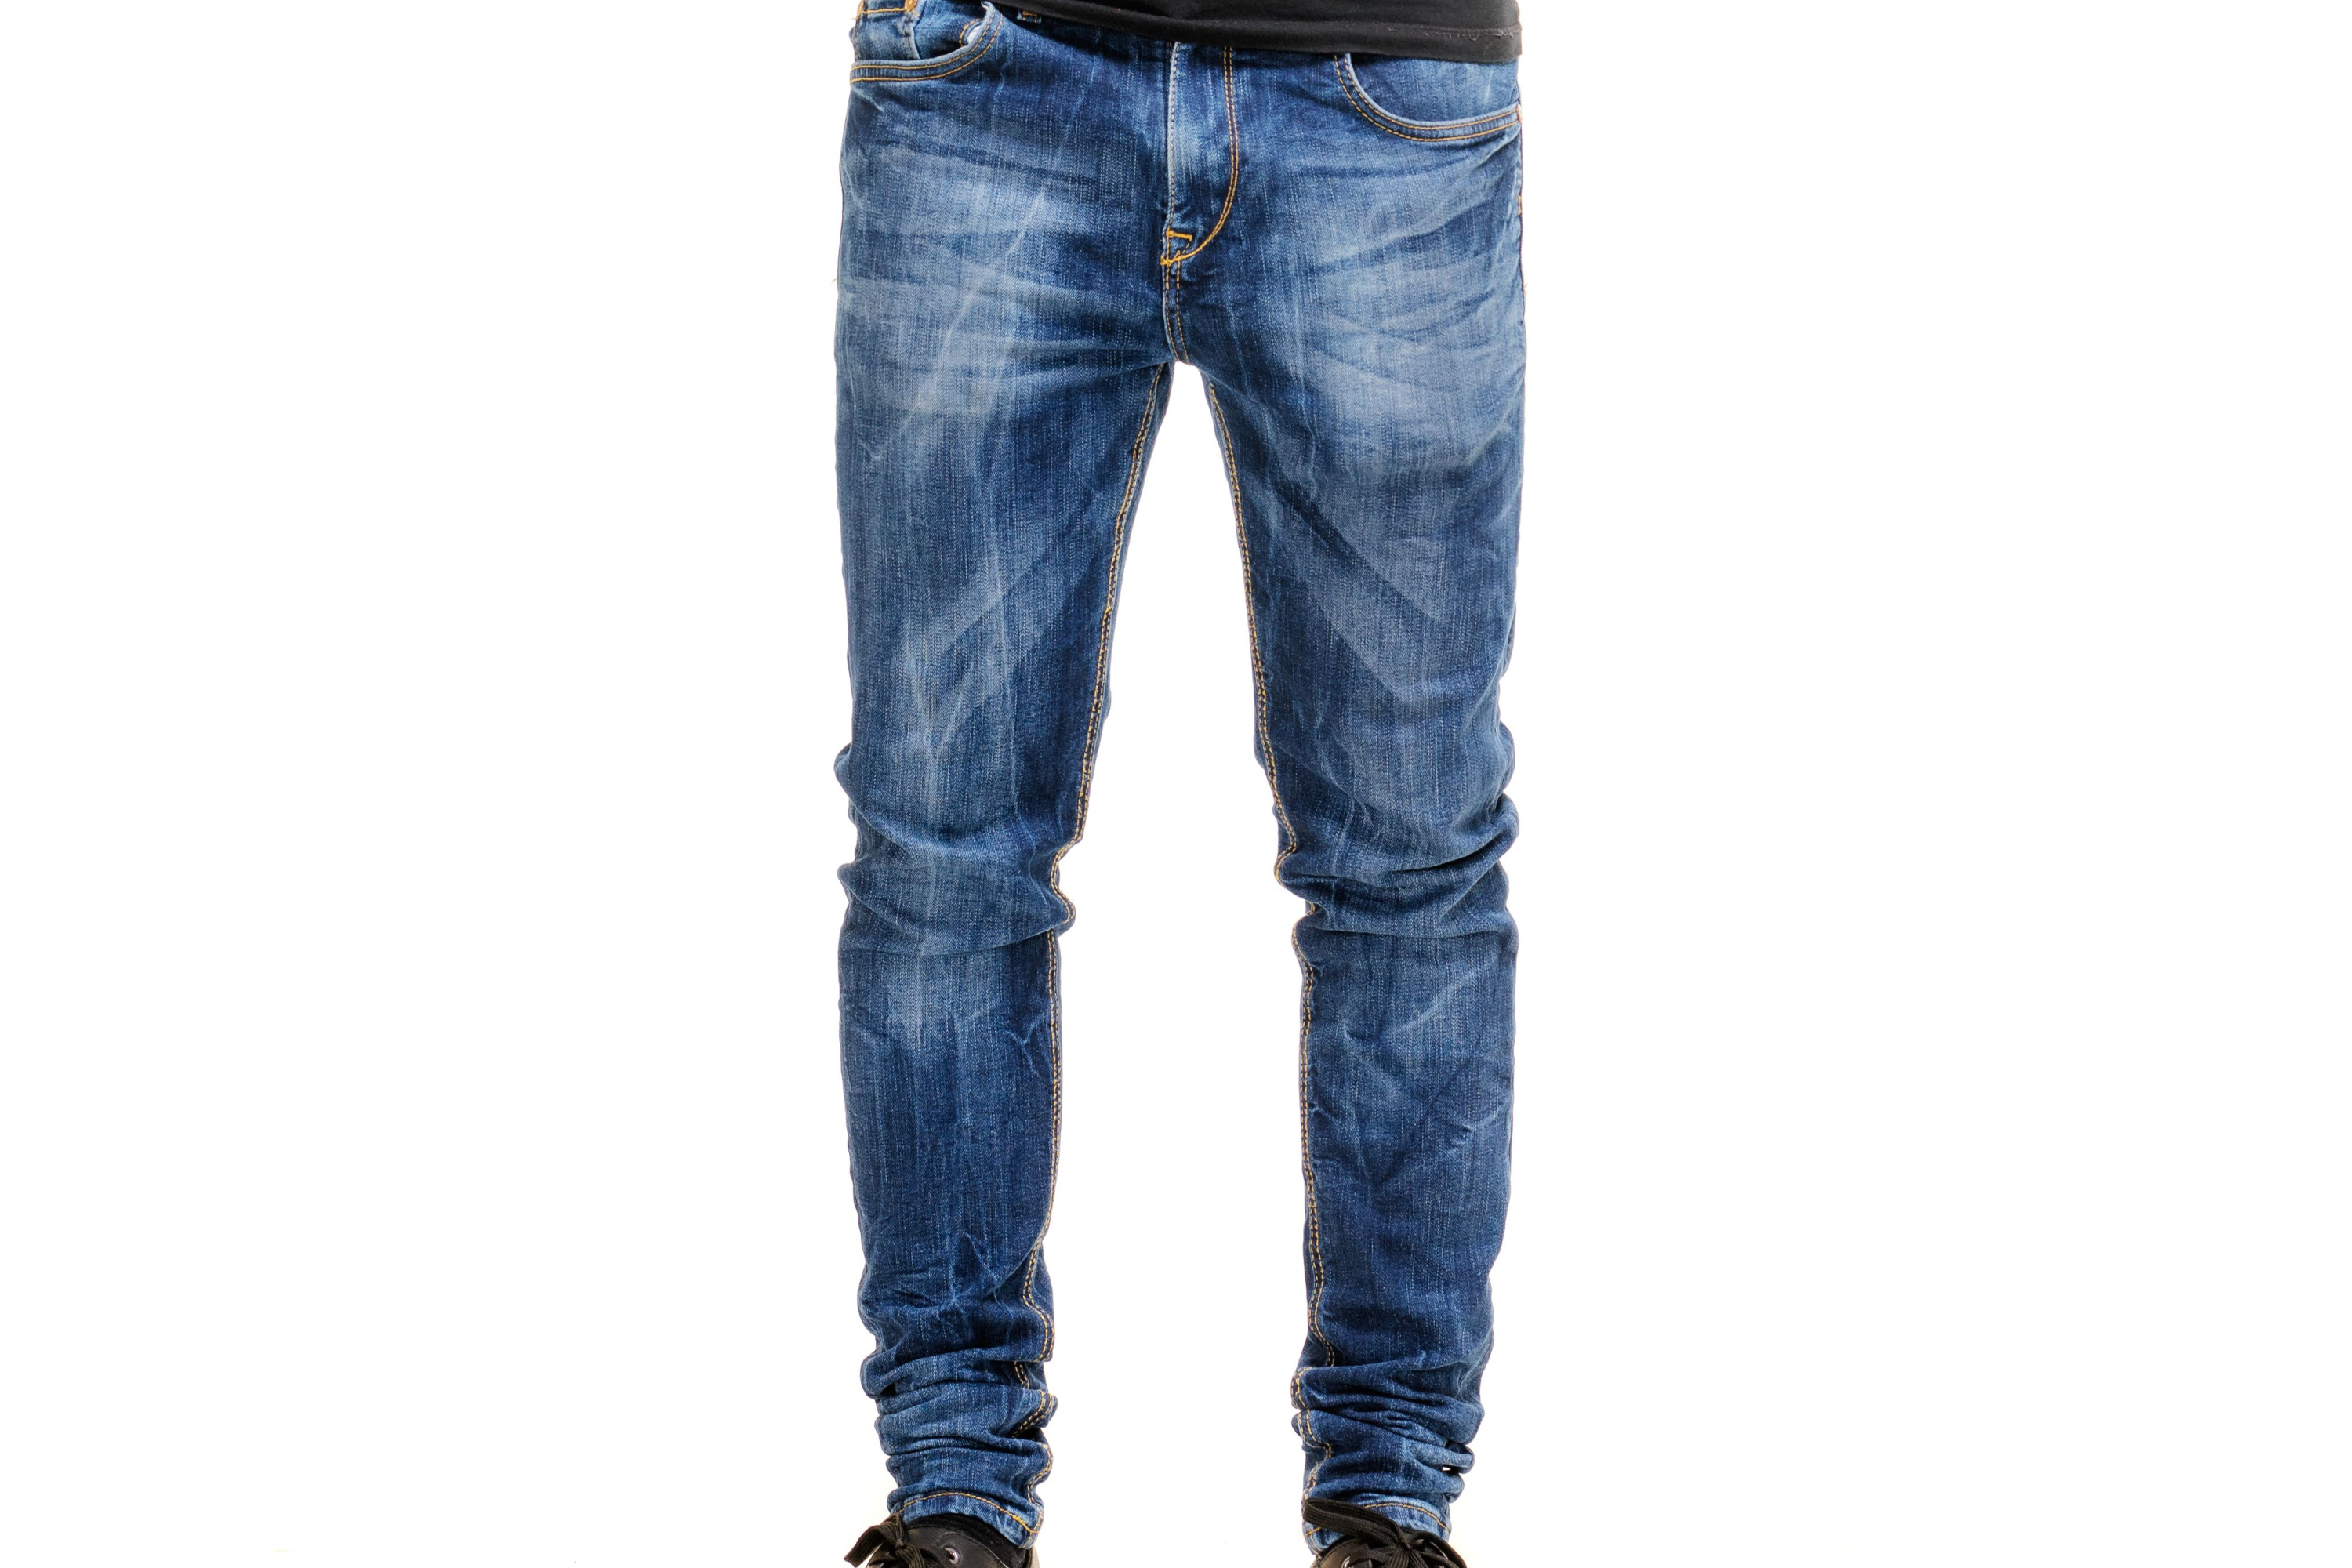 Urban Bliss Khaki Denim Cuffed Utility Jeans | New Look